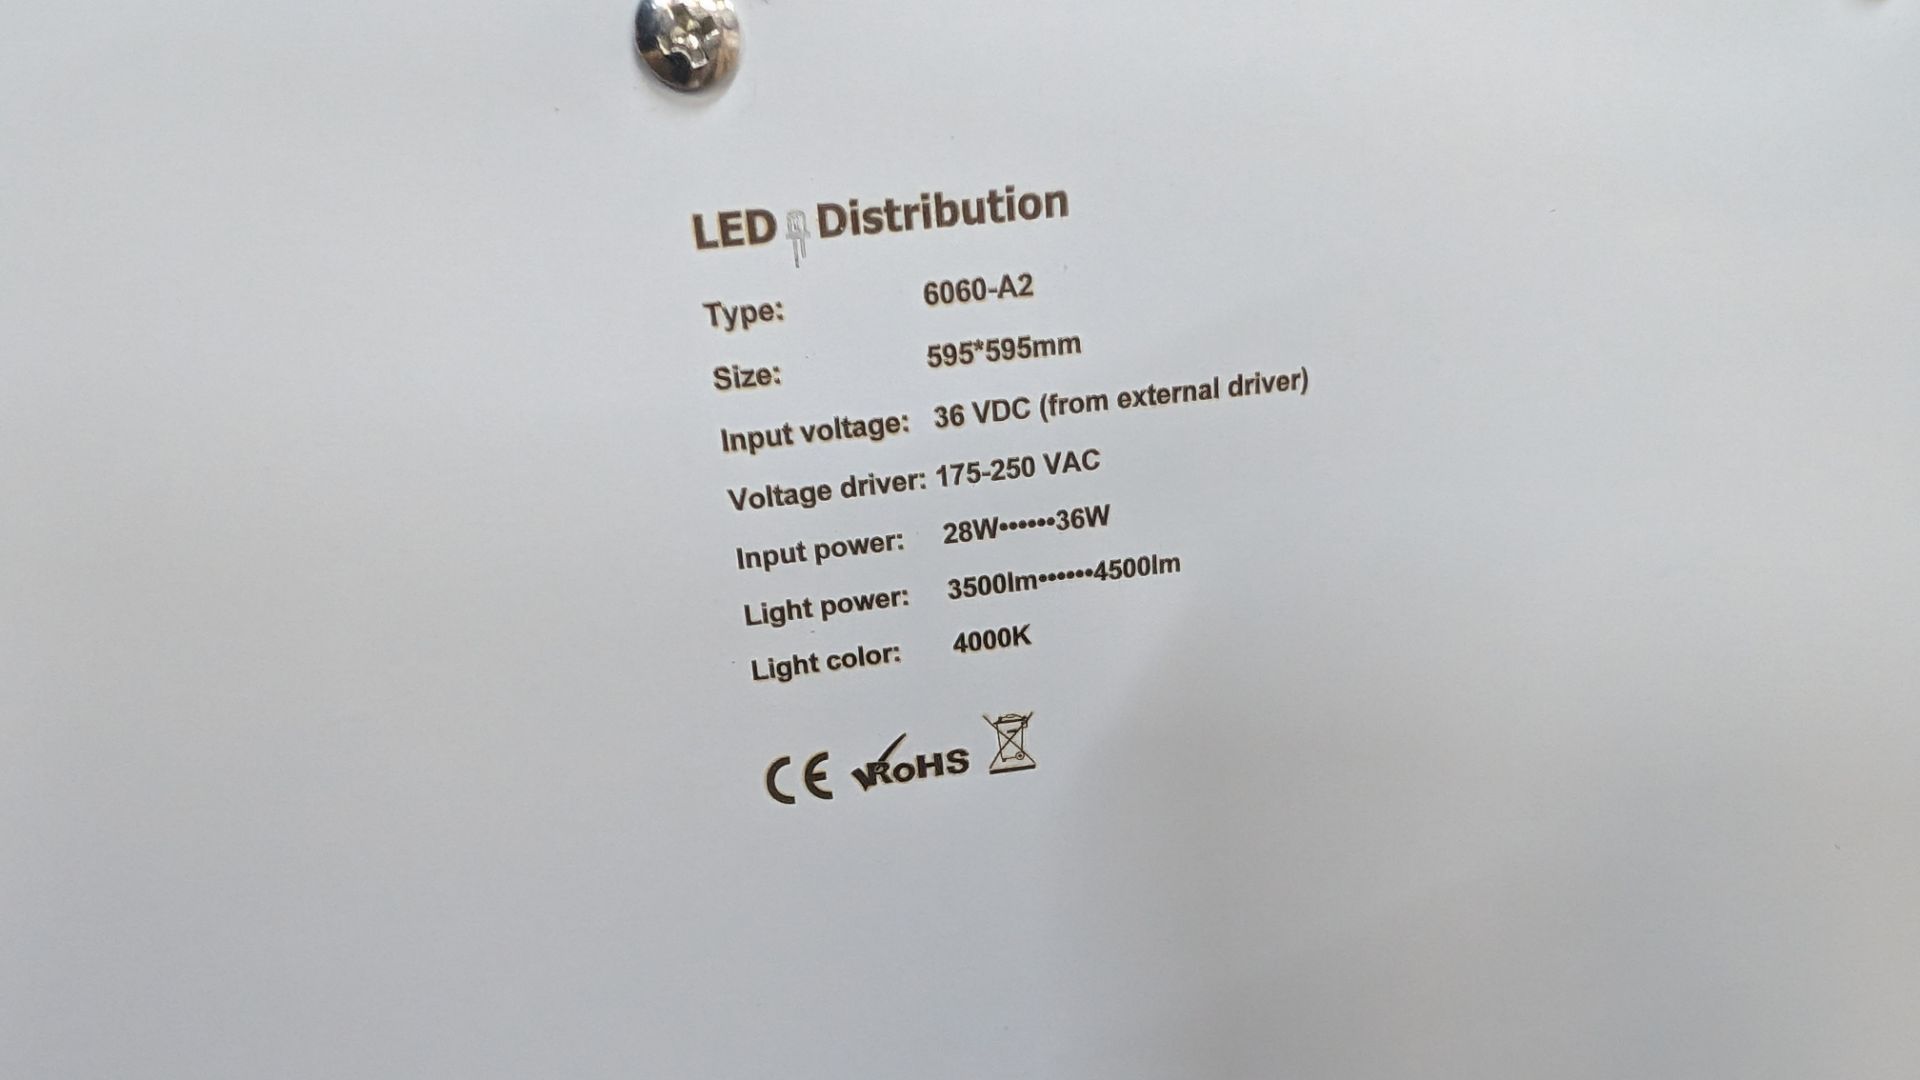 40 off Elegance Premium Eco 595mm x 595mm LED lighting panels. 4000k. 28/36w input power. 36w dri - Image 10 of 14